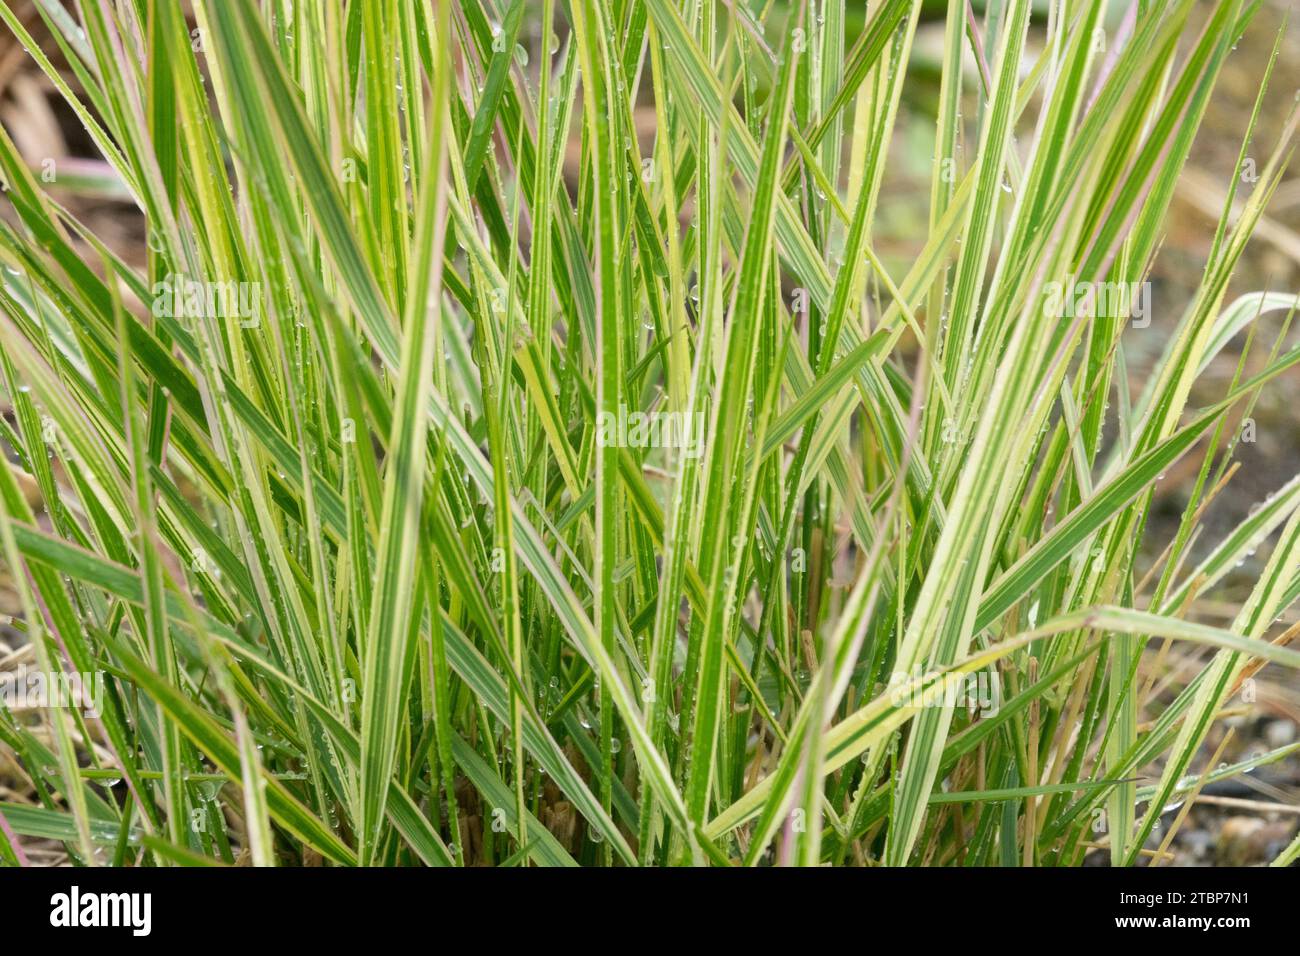 Calamagrostis Reed Grass Variegated Foliage Leaves Calamagrostis x acutiflora 'Overdam' Garden Season,Spring Feather Reed Grass Plant Stock Photo